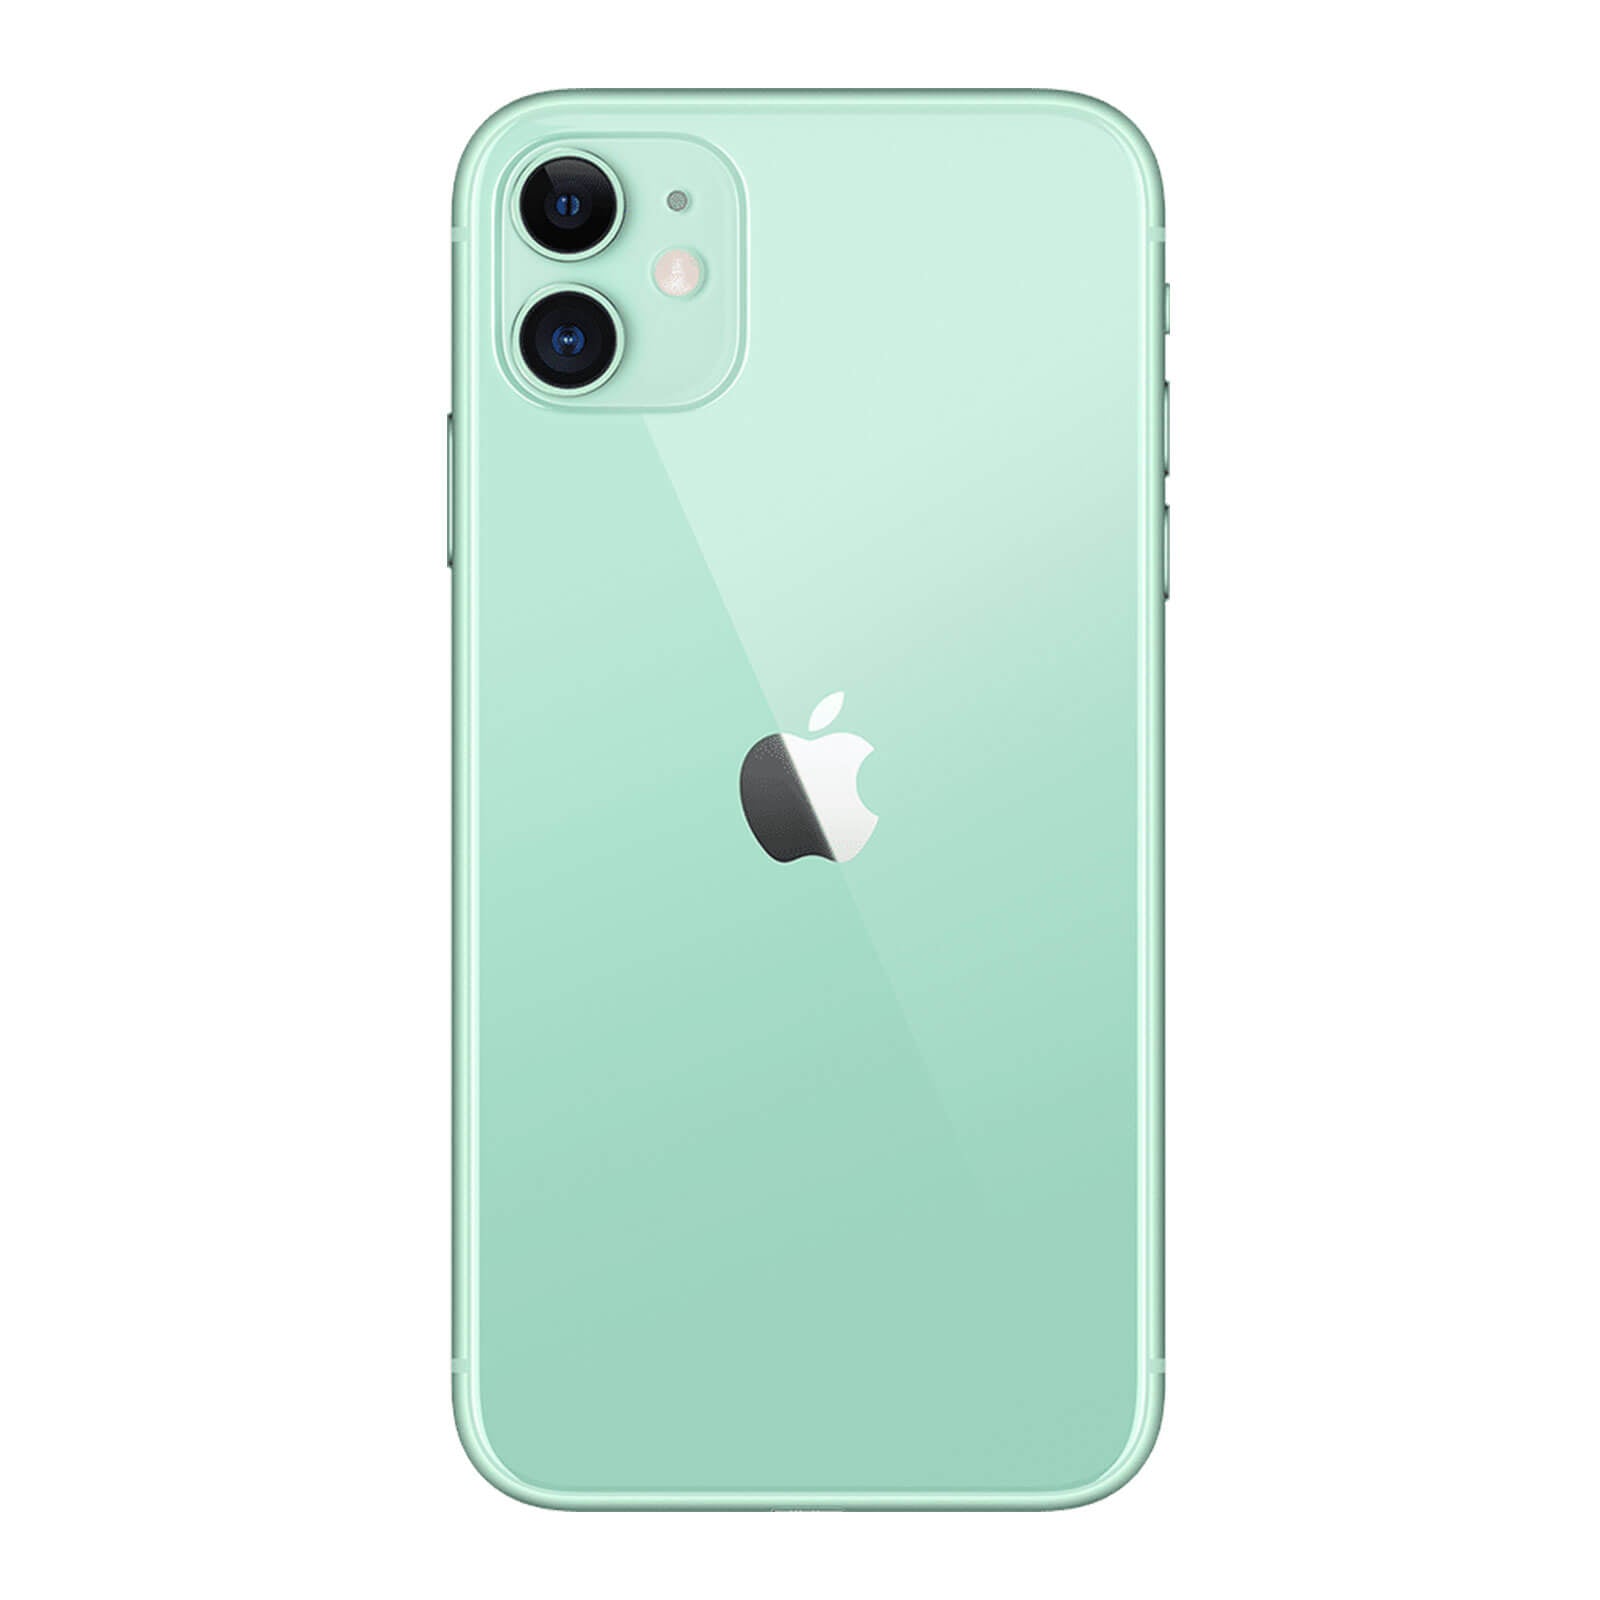 Apple iPhone 11 128GB Green Pristine - Sprint